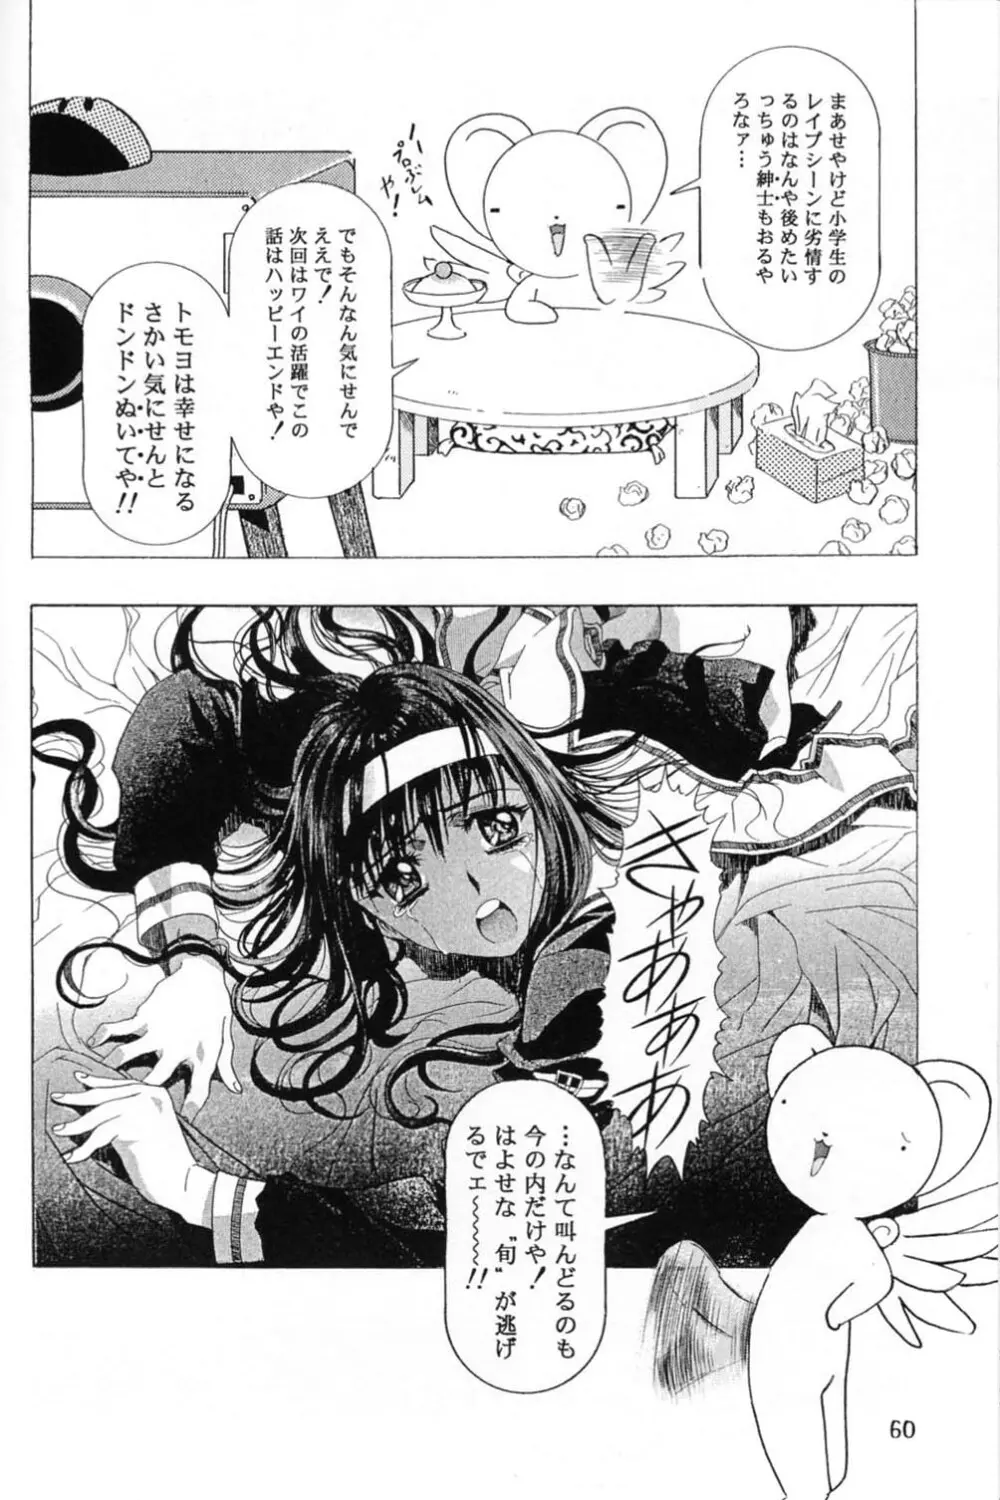 Sakura Ame 2.5 59ページ